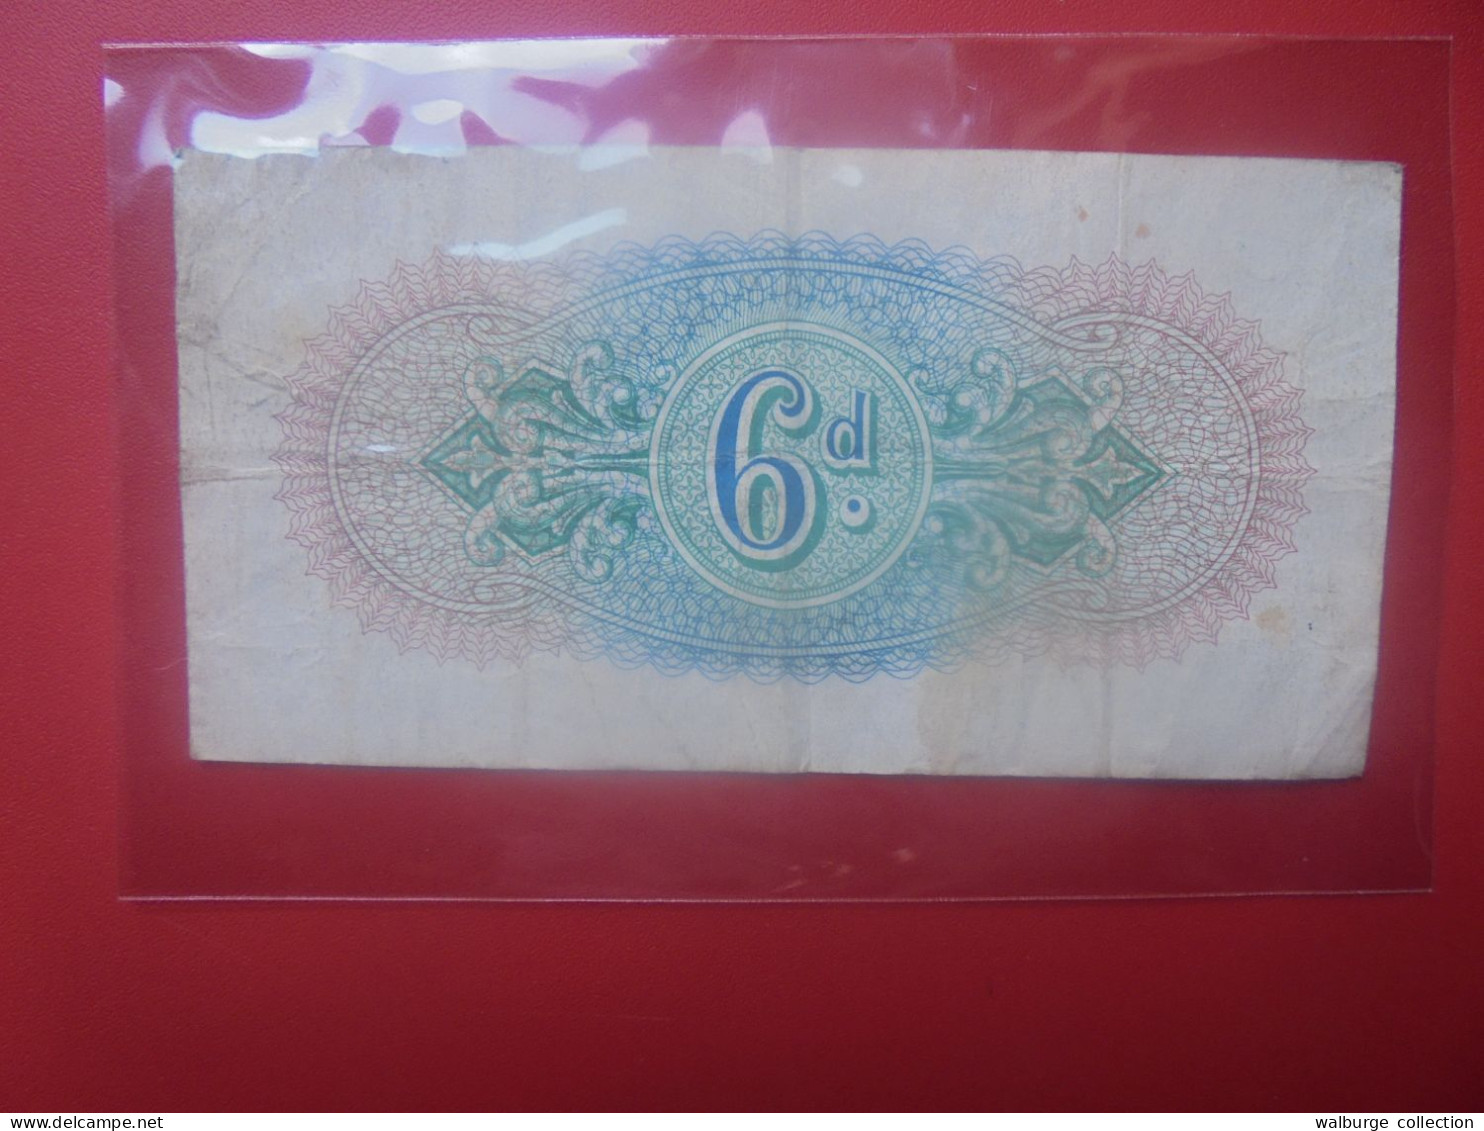 GRANDE-BRETAGNE (MILITAIRE) 6 Pence 1943 Circuler (B.33) - British Military Authority